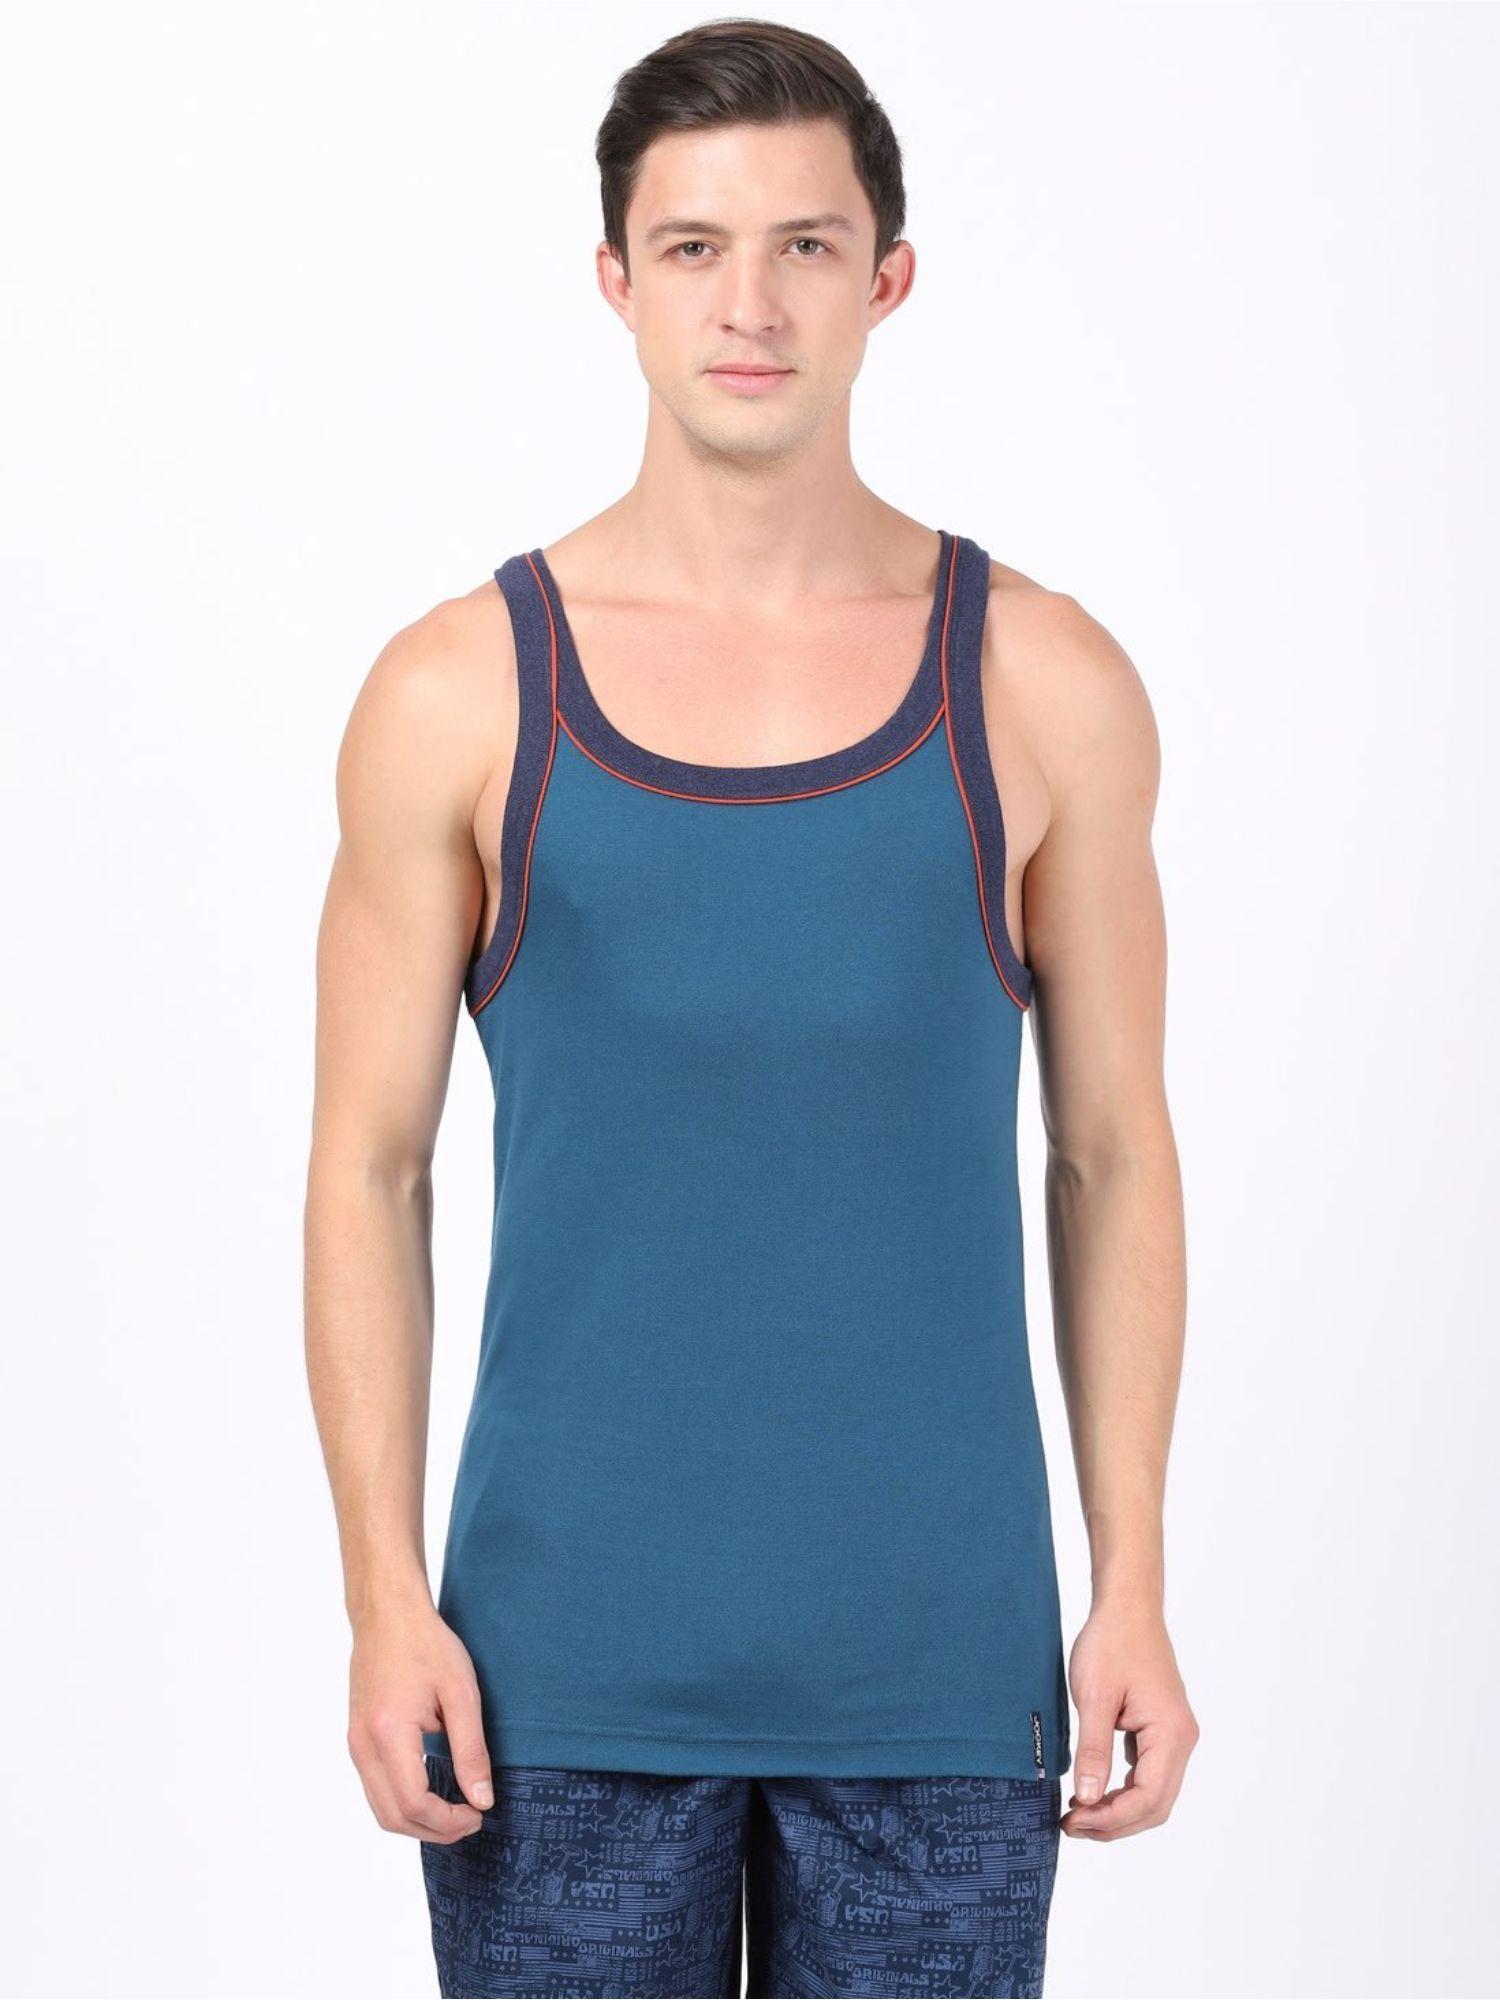 us54-mens-super-combed-cotton-scoop-neck-gym-vest-with-back-panel-blue